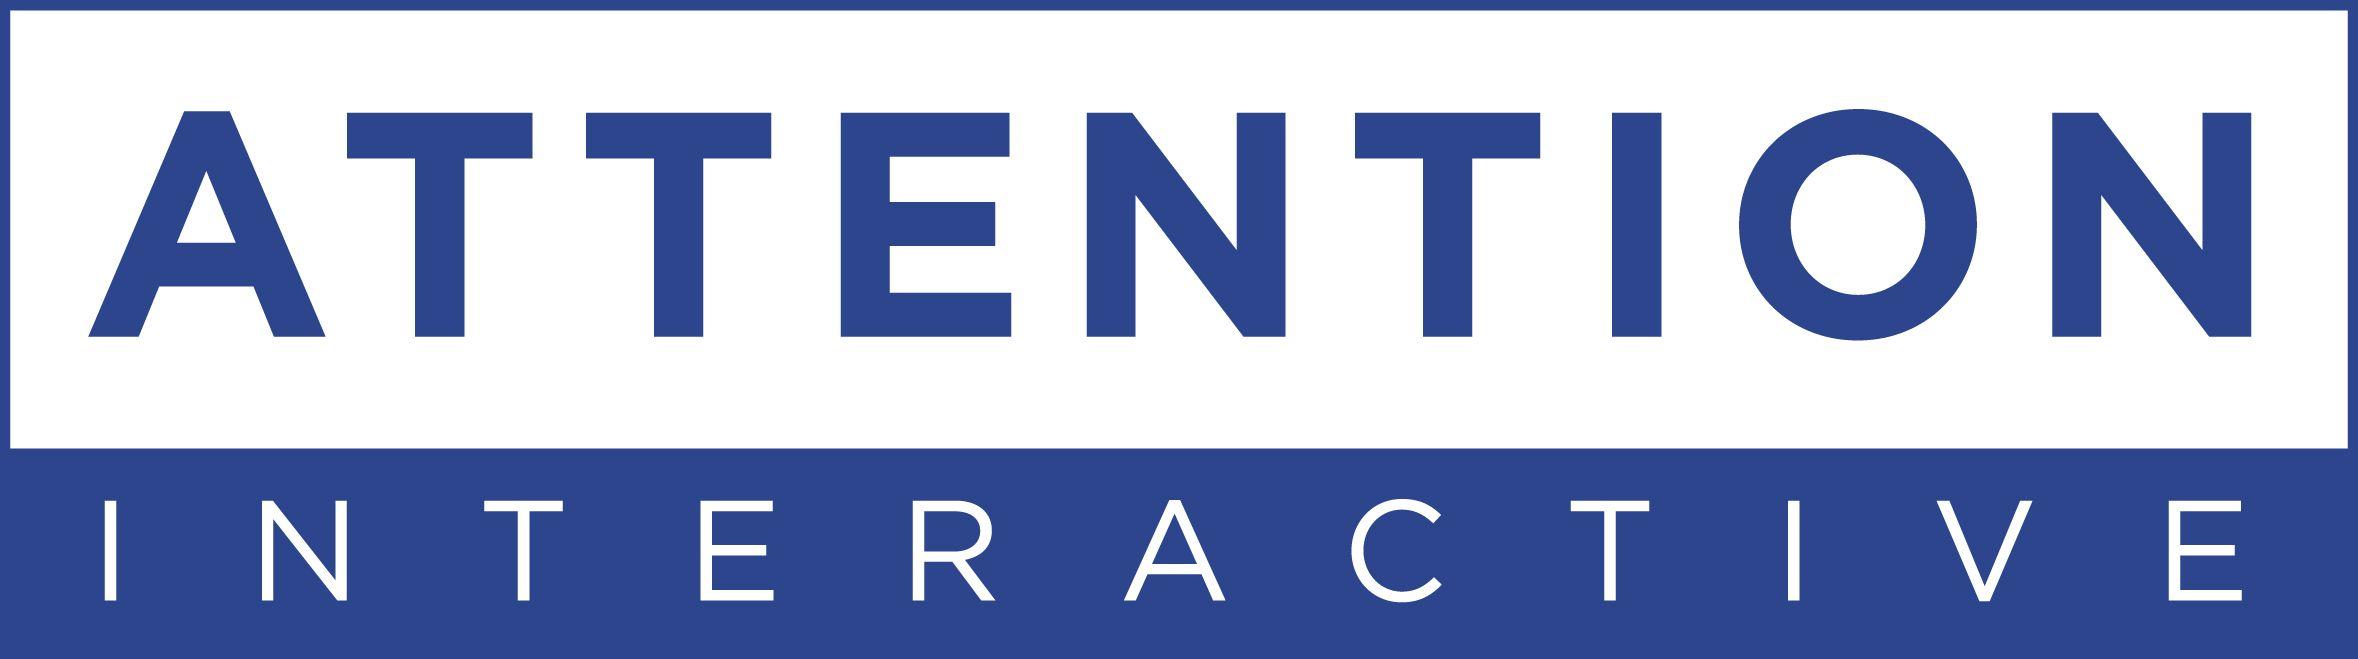 Attention Logo - Los Angeles Digital Marketing Agency